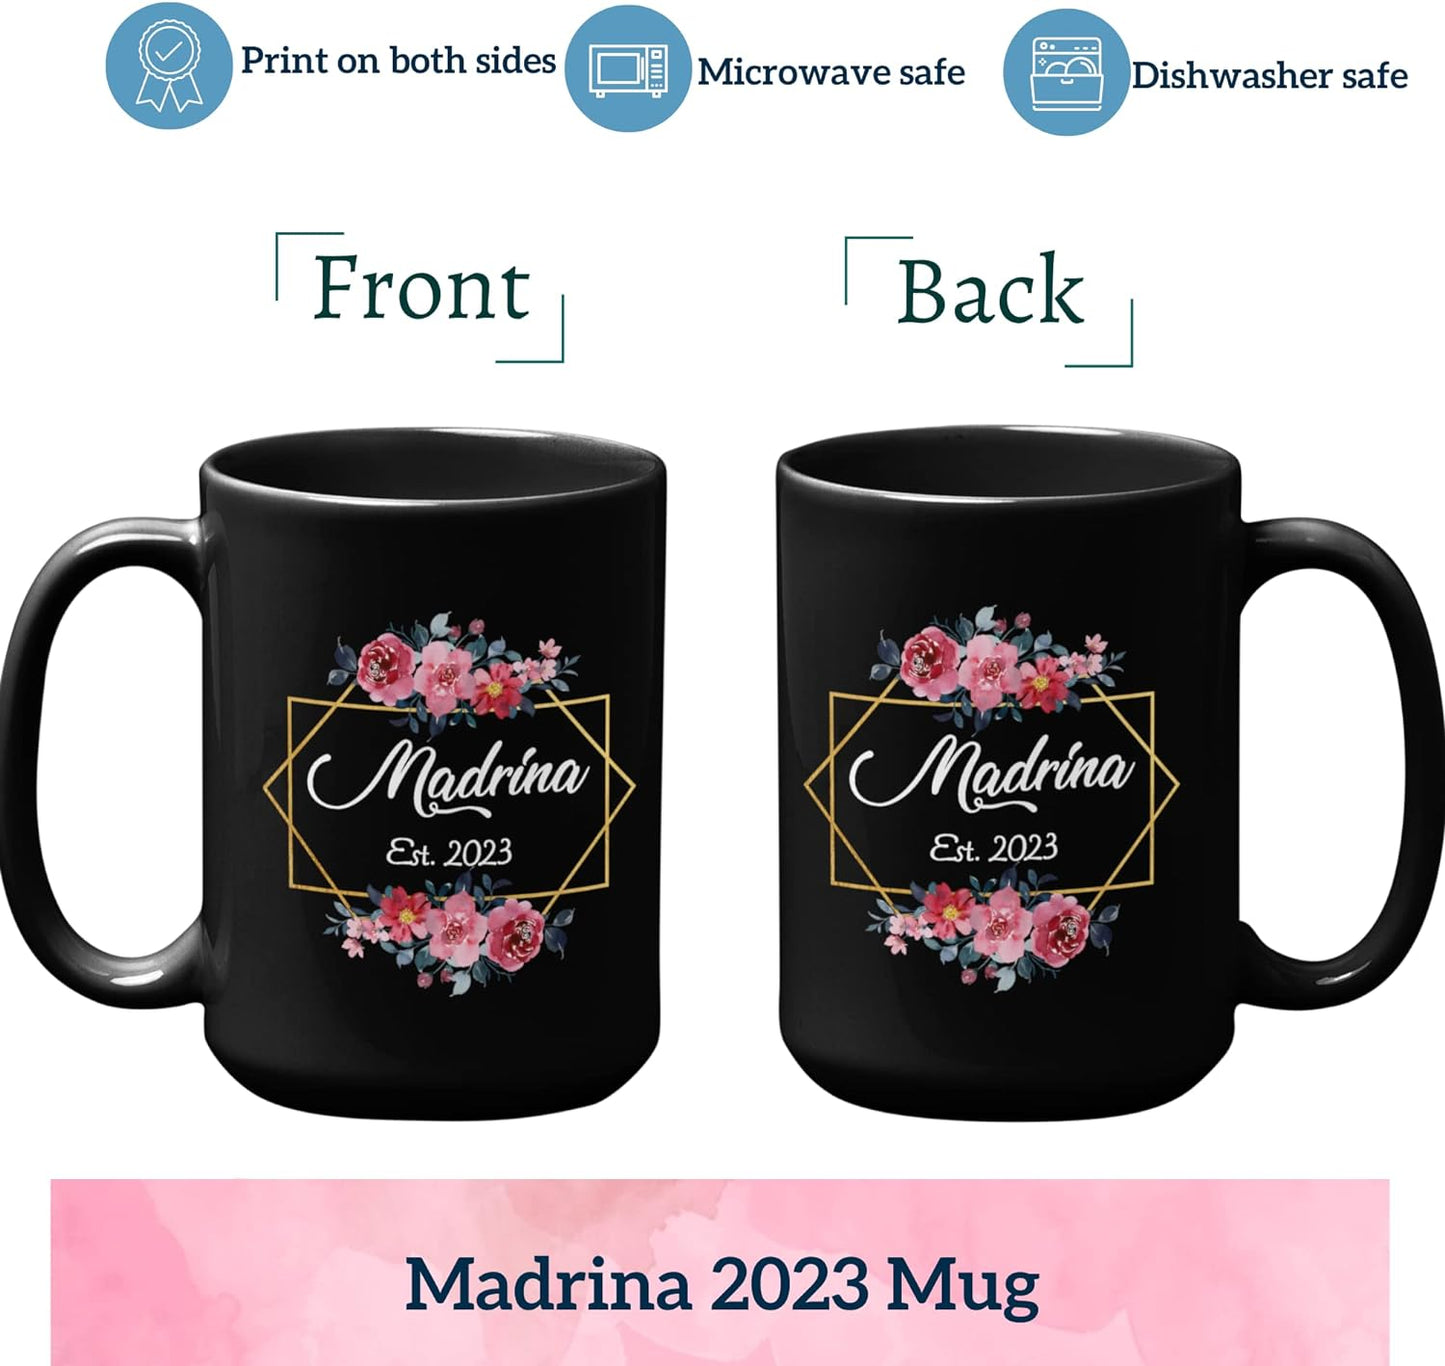 Padrino Madrina Coffee Mugs, God Parents Presents Proposal, Padrinos De Bautizo Propuesta Gifts, Madrina Padrinos Proposal Spanish Mug Set, Godfather Announcement Gift, Godparents Proposal Gift